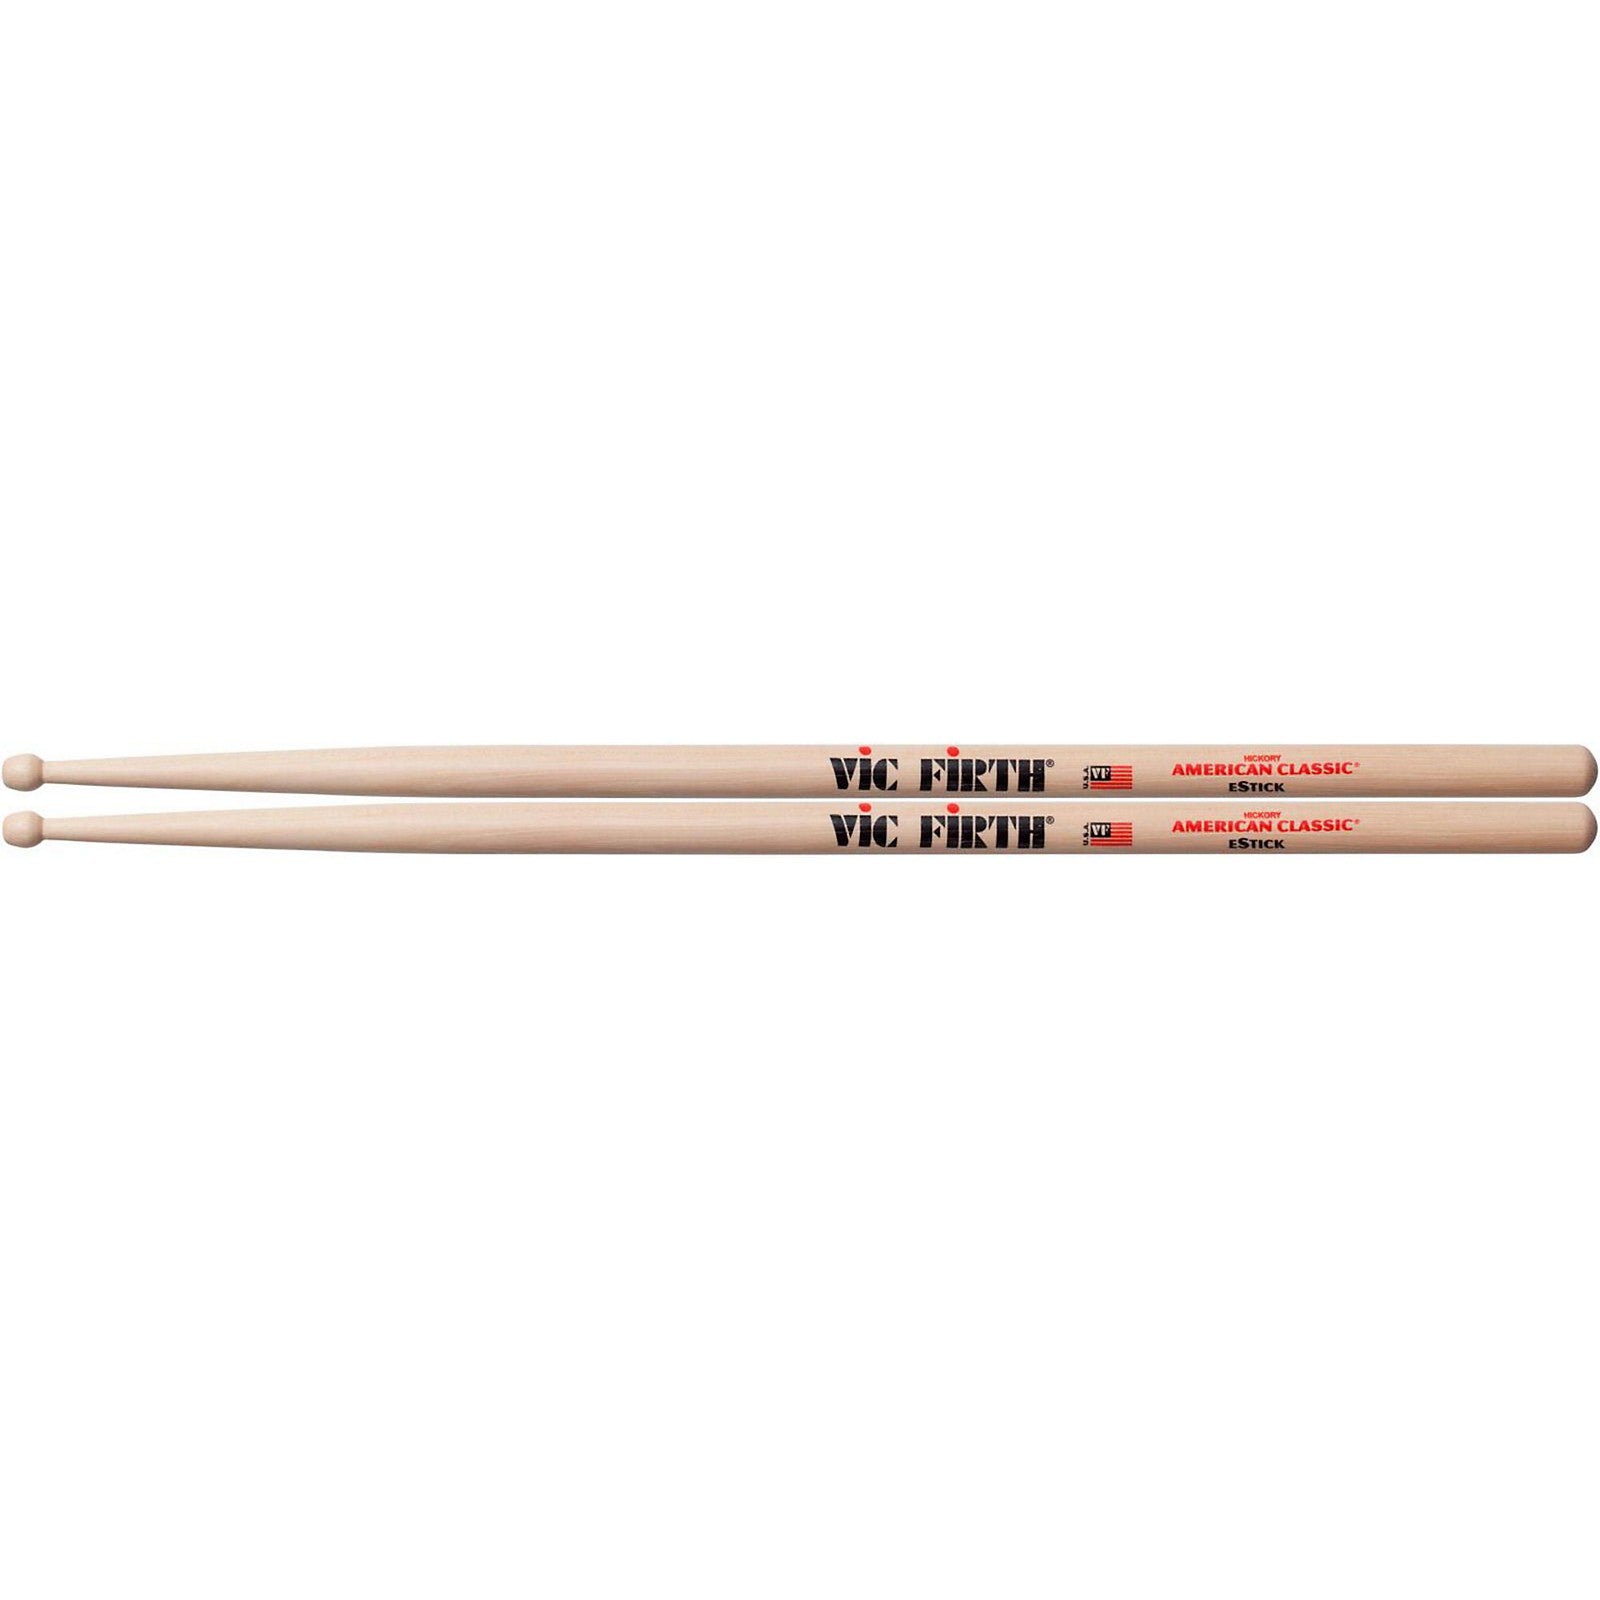 Vic Firth American Classic Drumsticks - Estick - Wood Tip